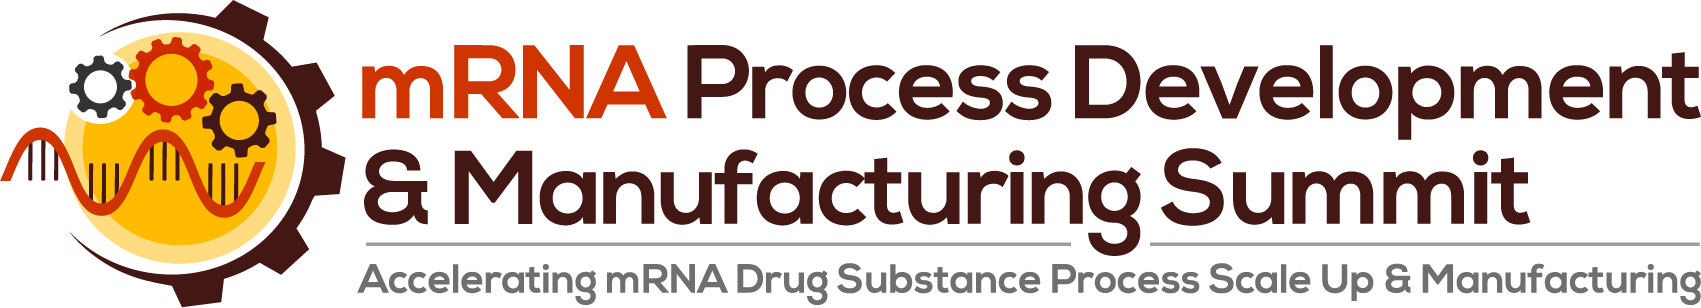 27827 mRNA Process & Manufacturing Summit logo